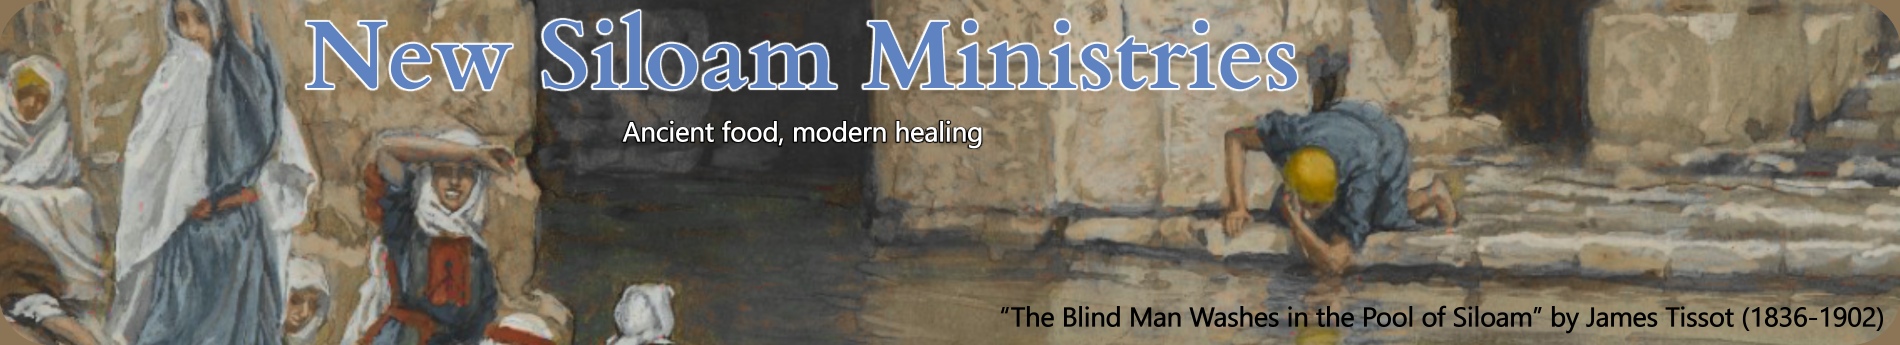 New Siloam Ministries Logo